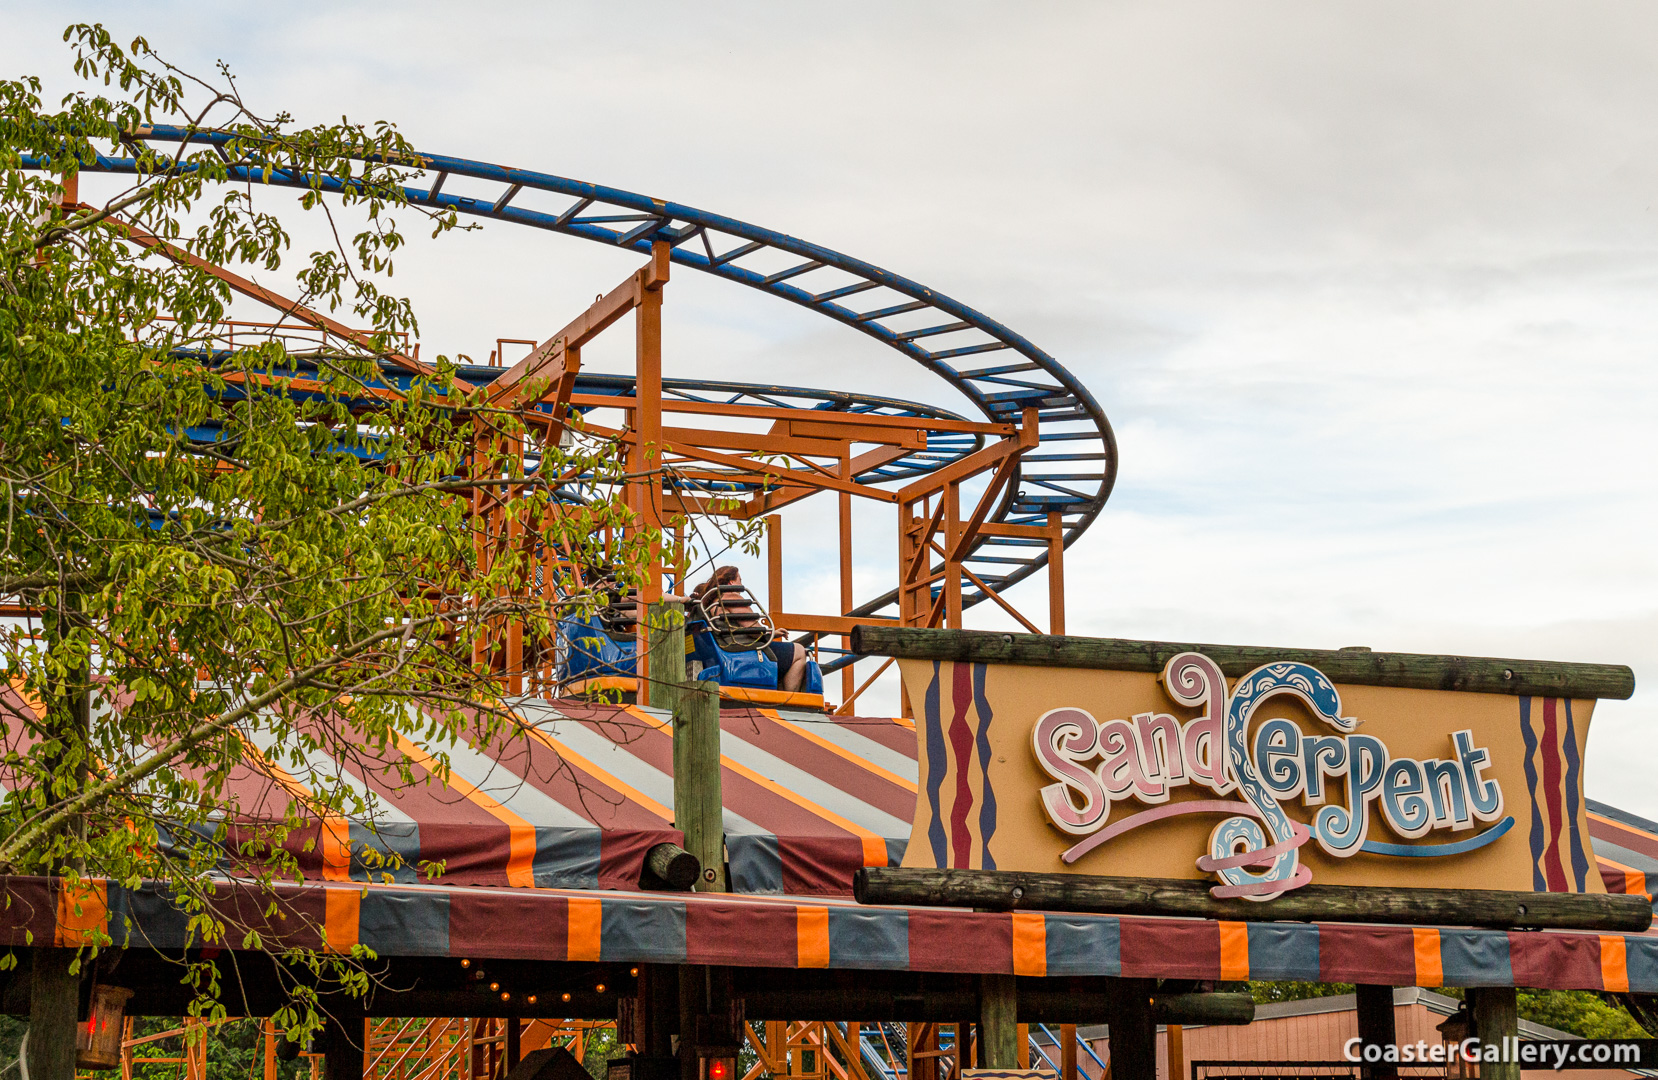 Sand Serpent roller coaster